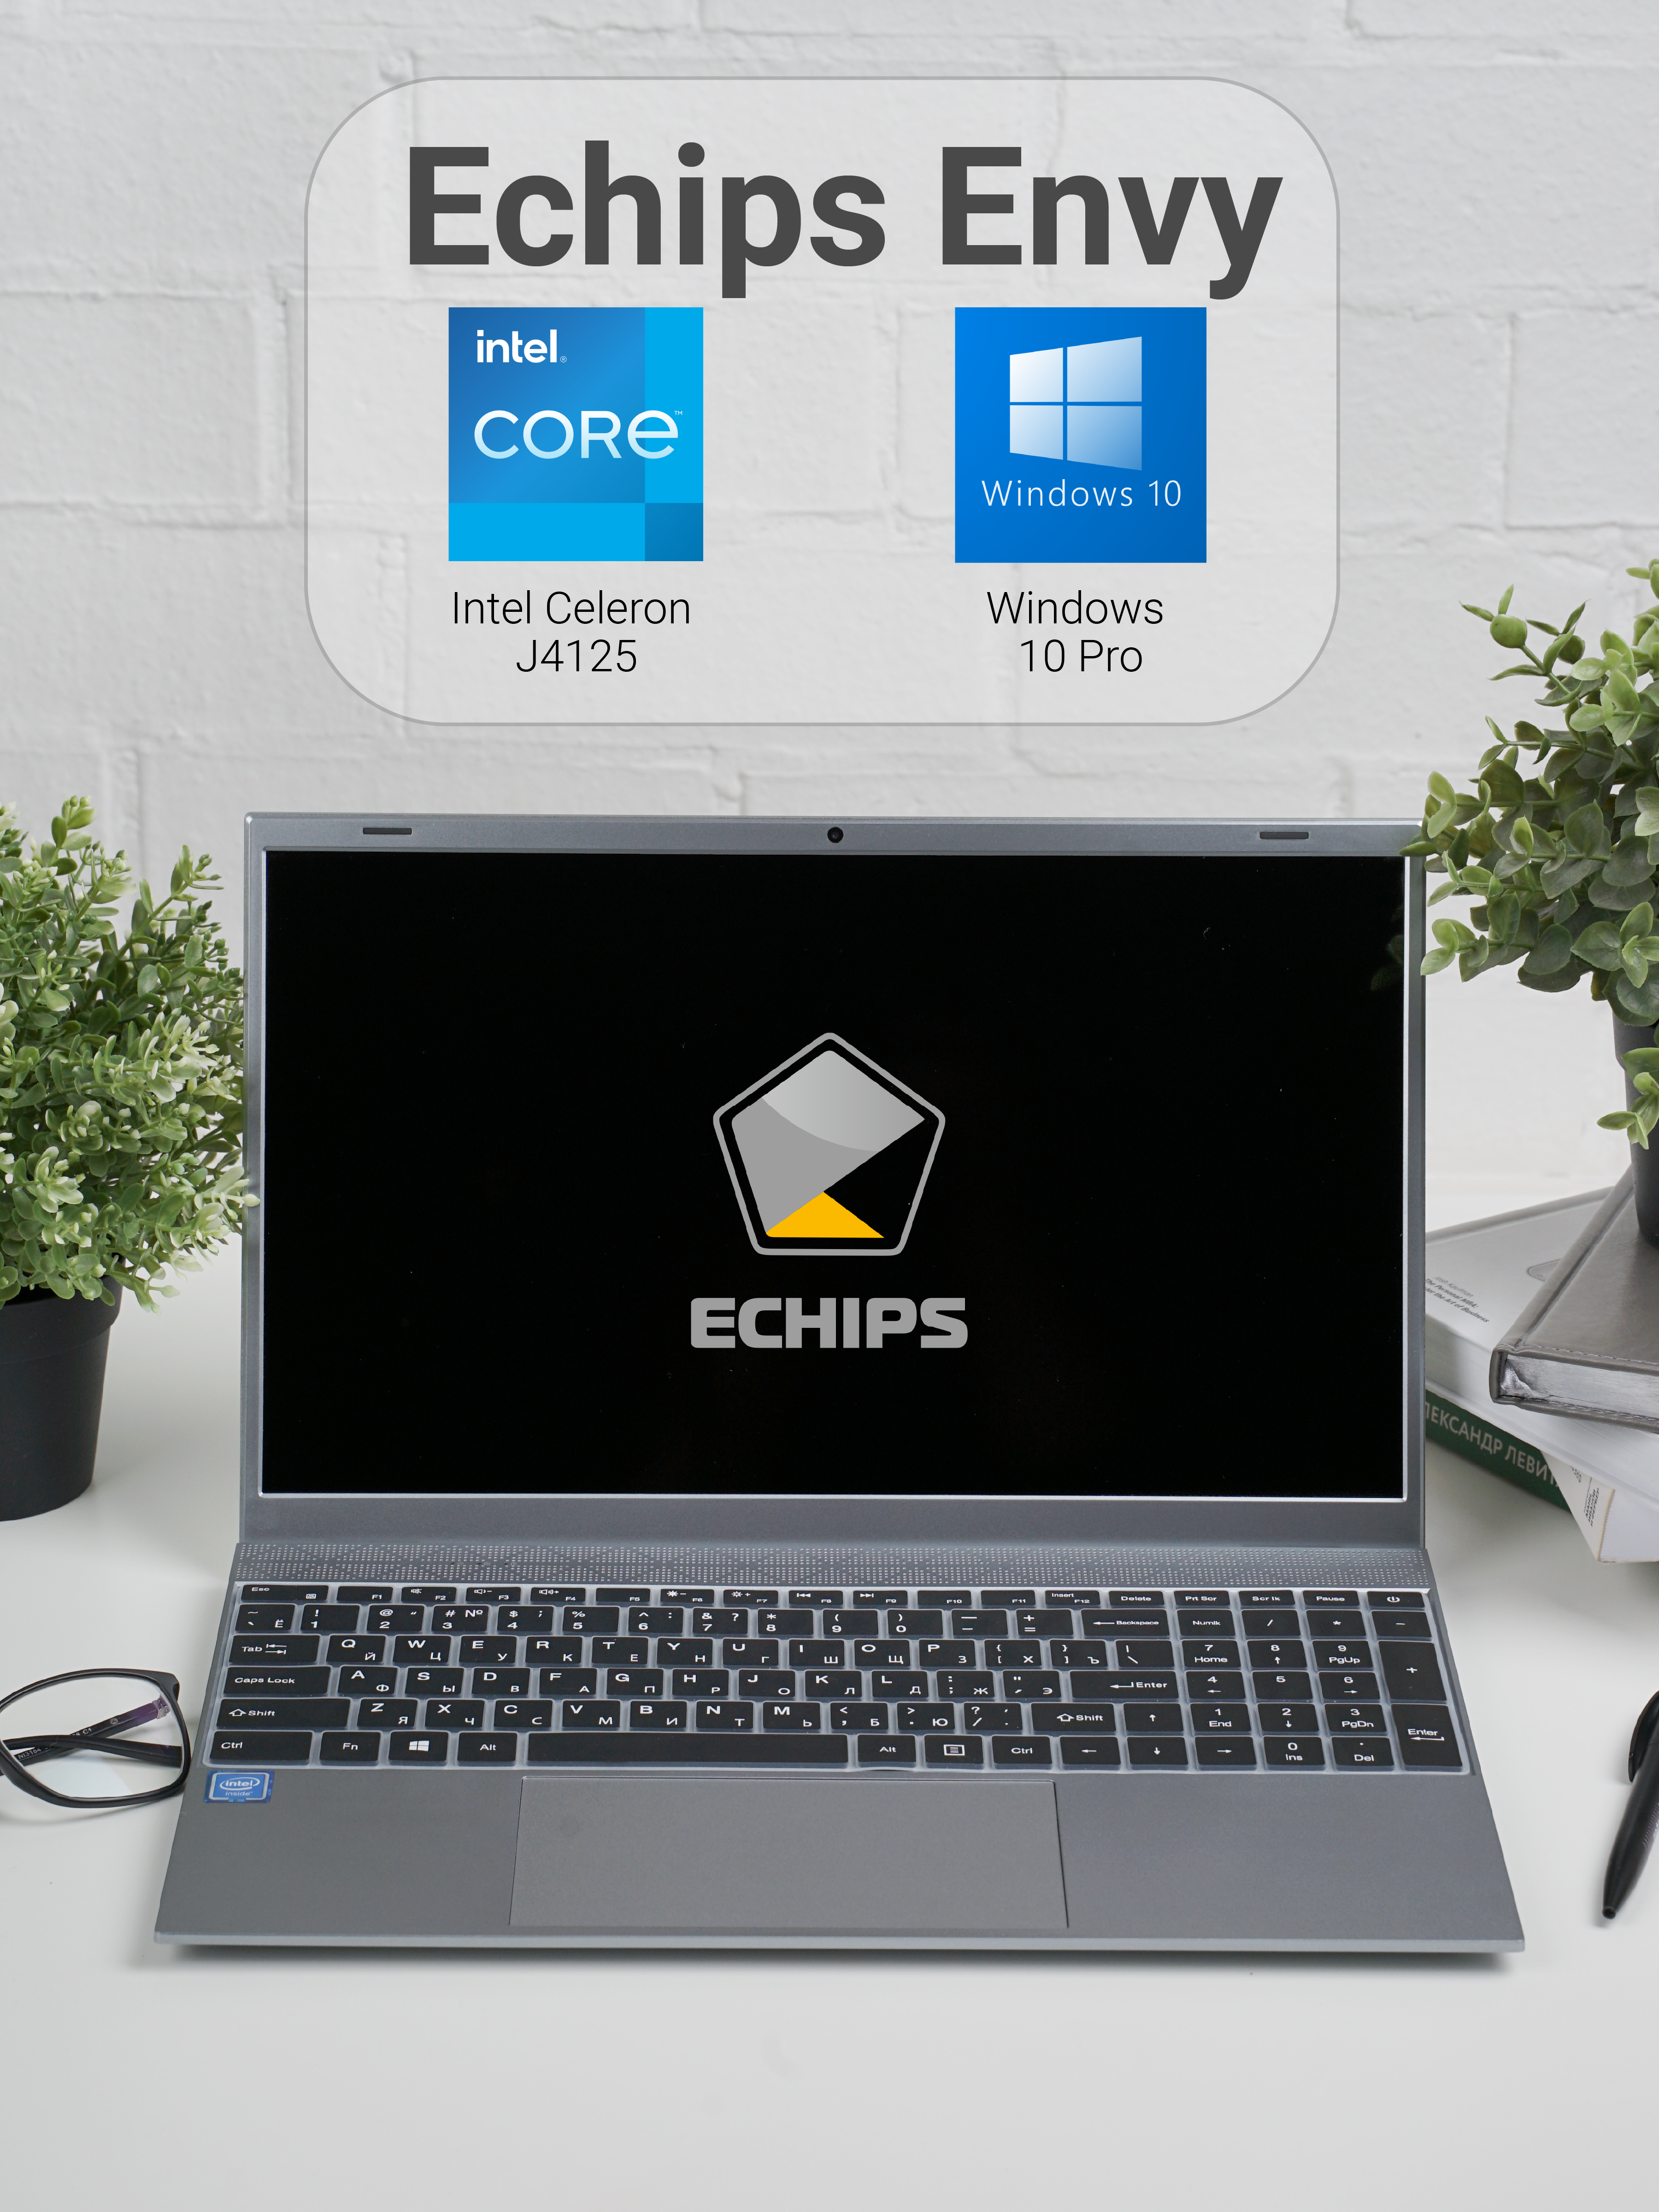 Ноутбук echips Envy. Процессор: Intel Celeron j4125 (2.0 ГГЦ). Echips Envy 15.6. Echips j4125. Echips envy 14